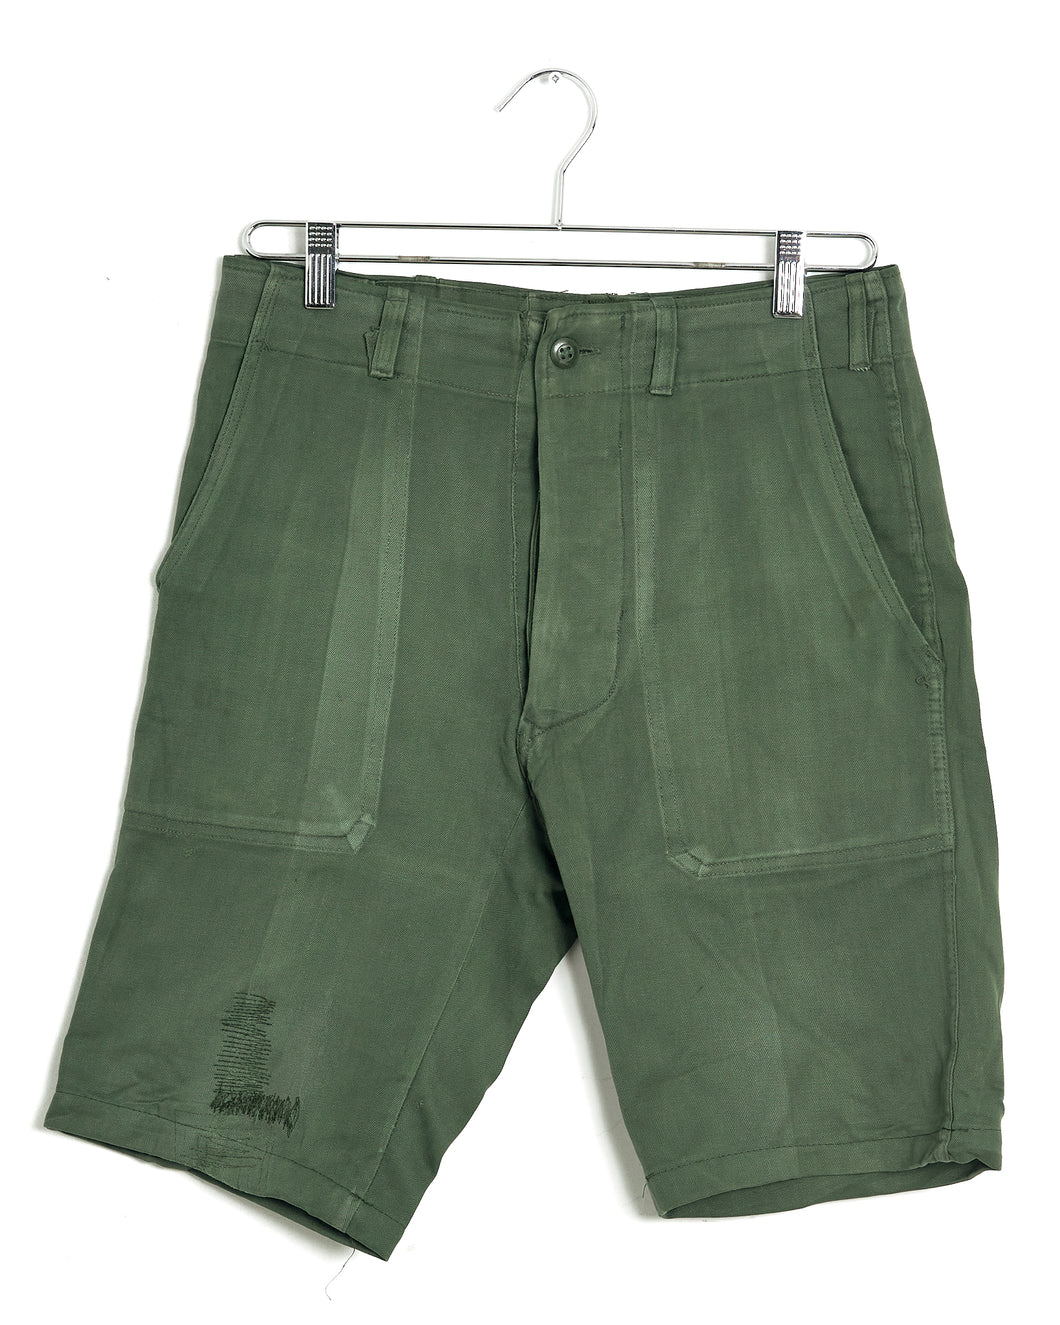 1950s/60s Korean War HBT Shorts - 30